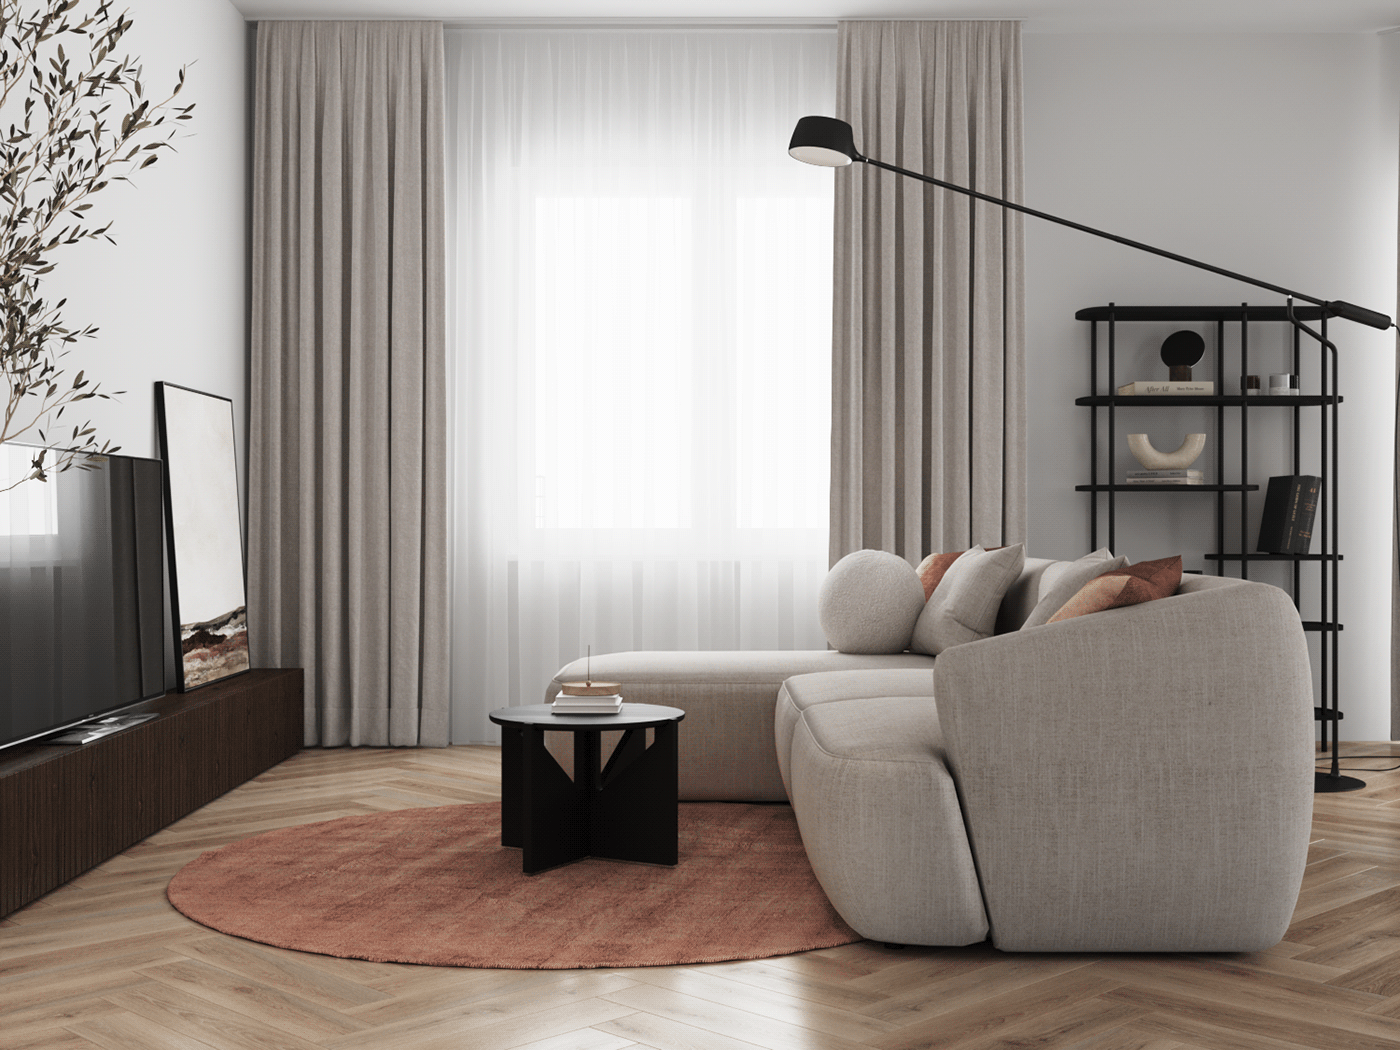 interior design  Interior living room apartment design visualization интерьер визуализация 3ds max дизайн интерьера кухня-гостиная